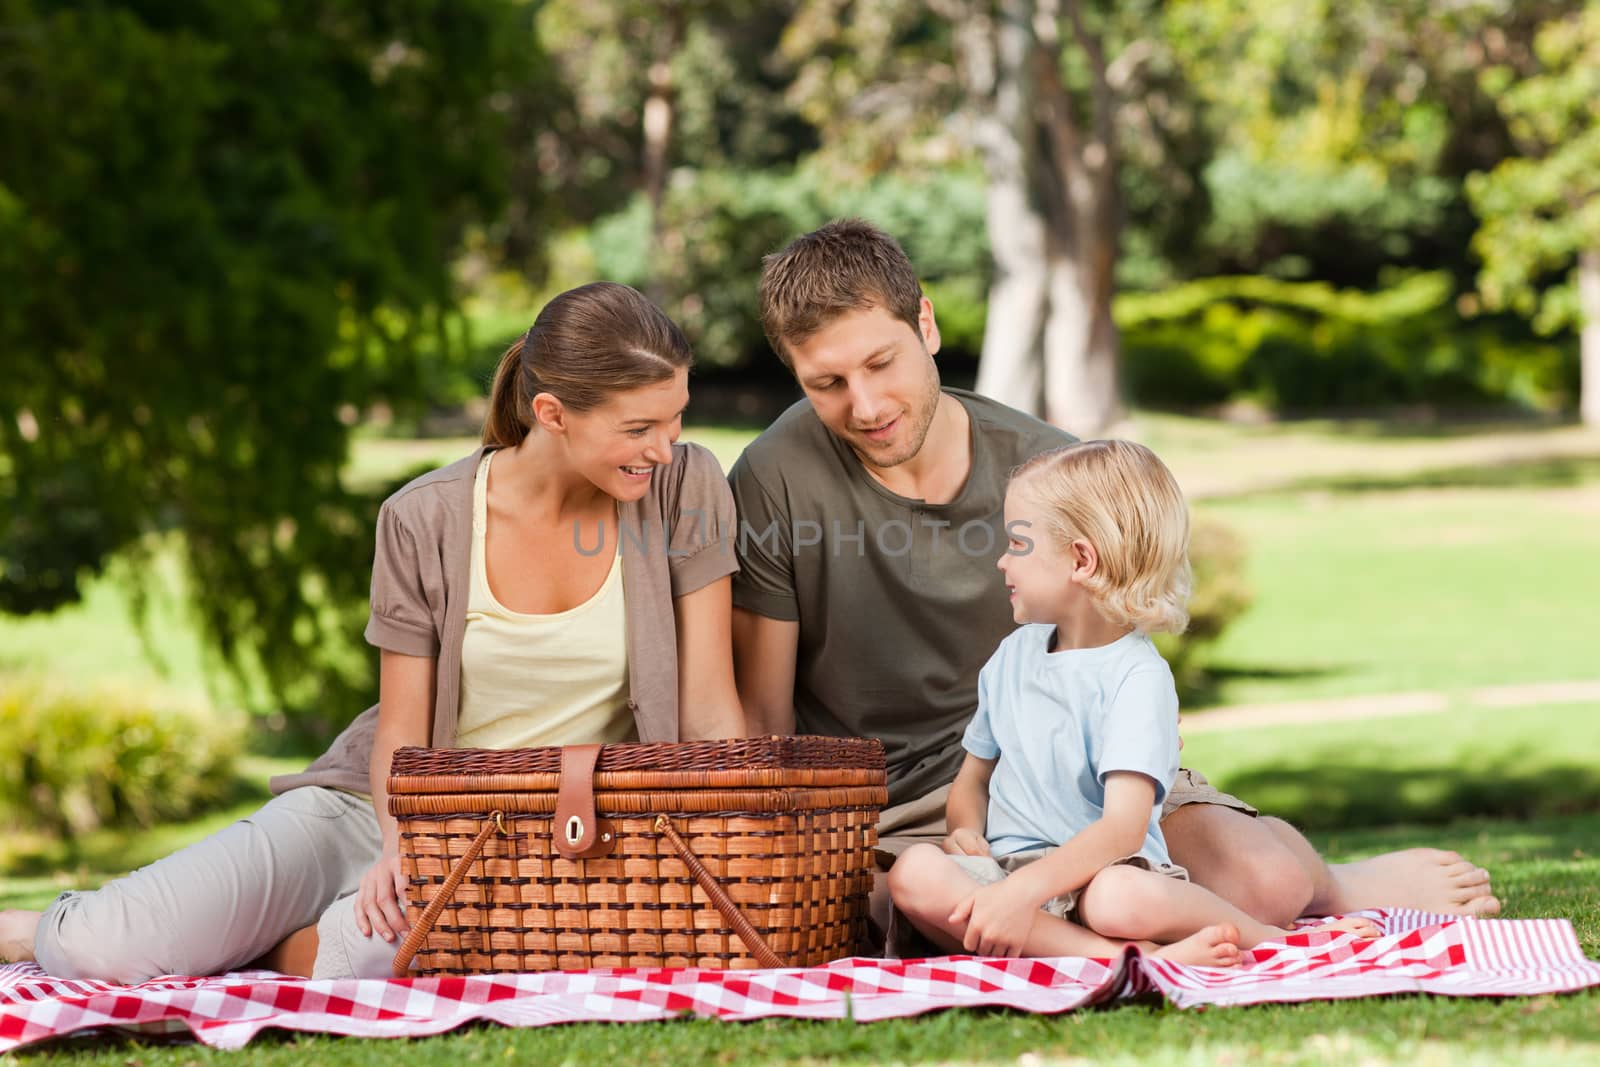 Joyful family picnicking in the park by Wavebreakmedia